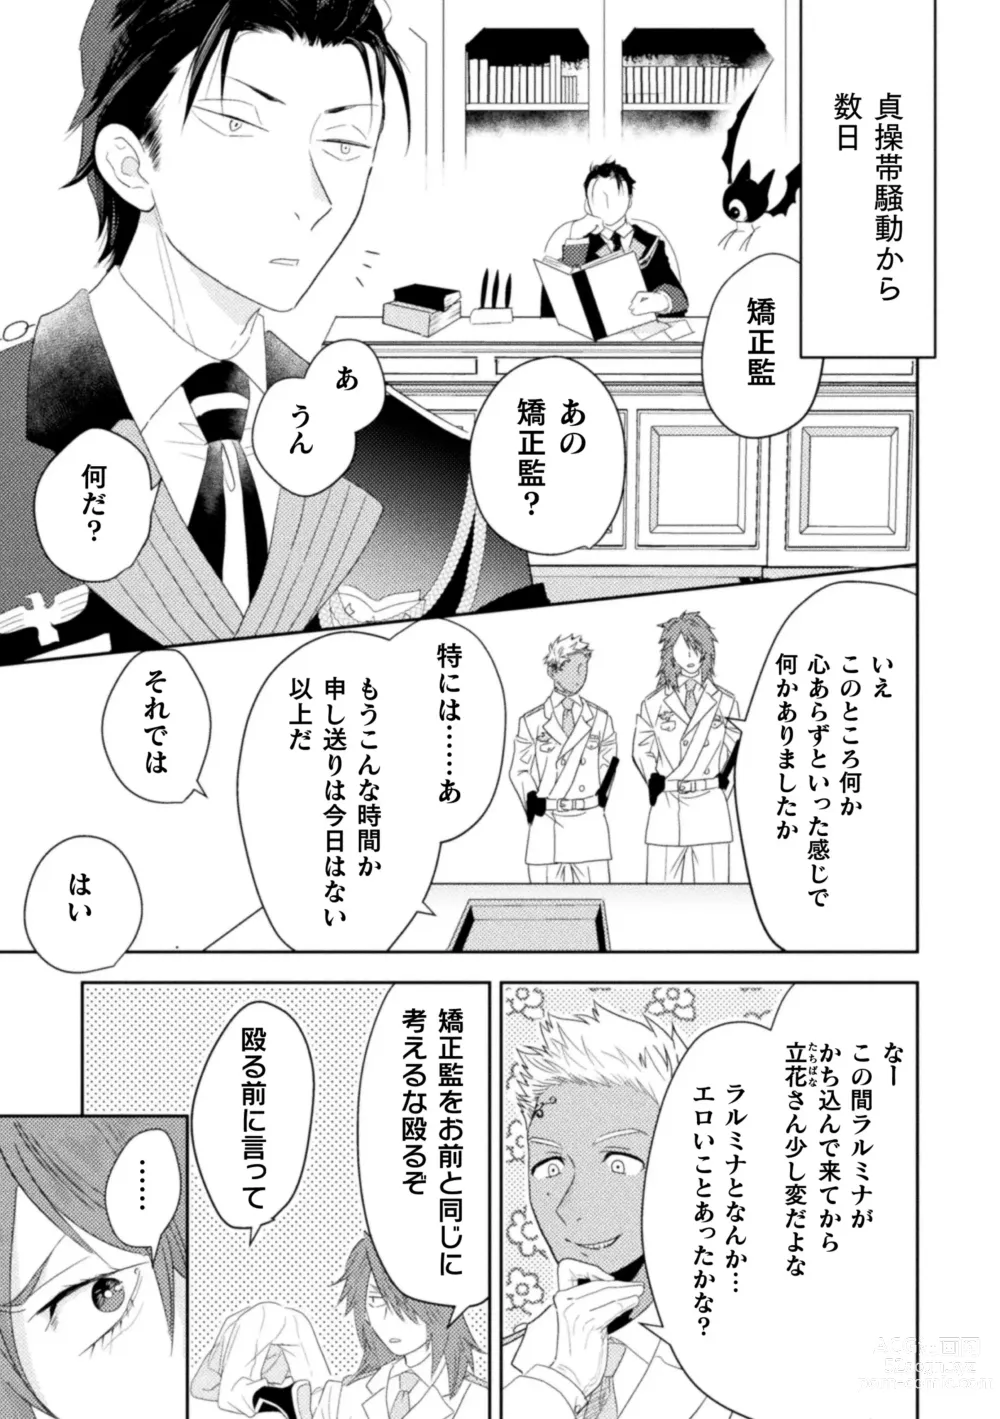 Page 3 of manga Zekkai Rougoku 5 Eien no Rougoku Zenpen